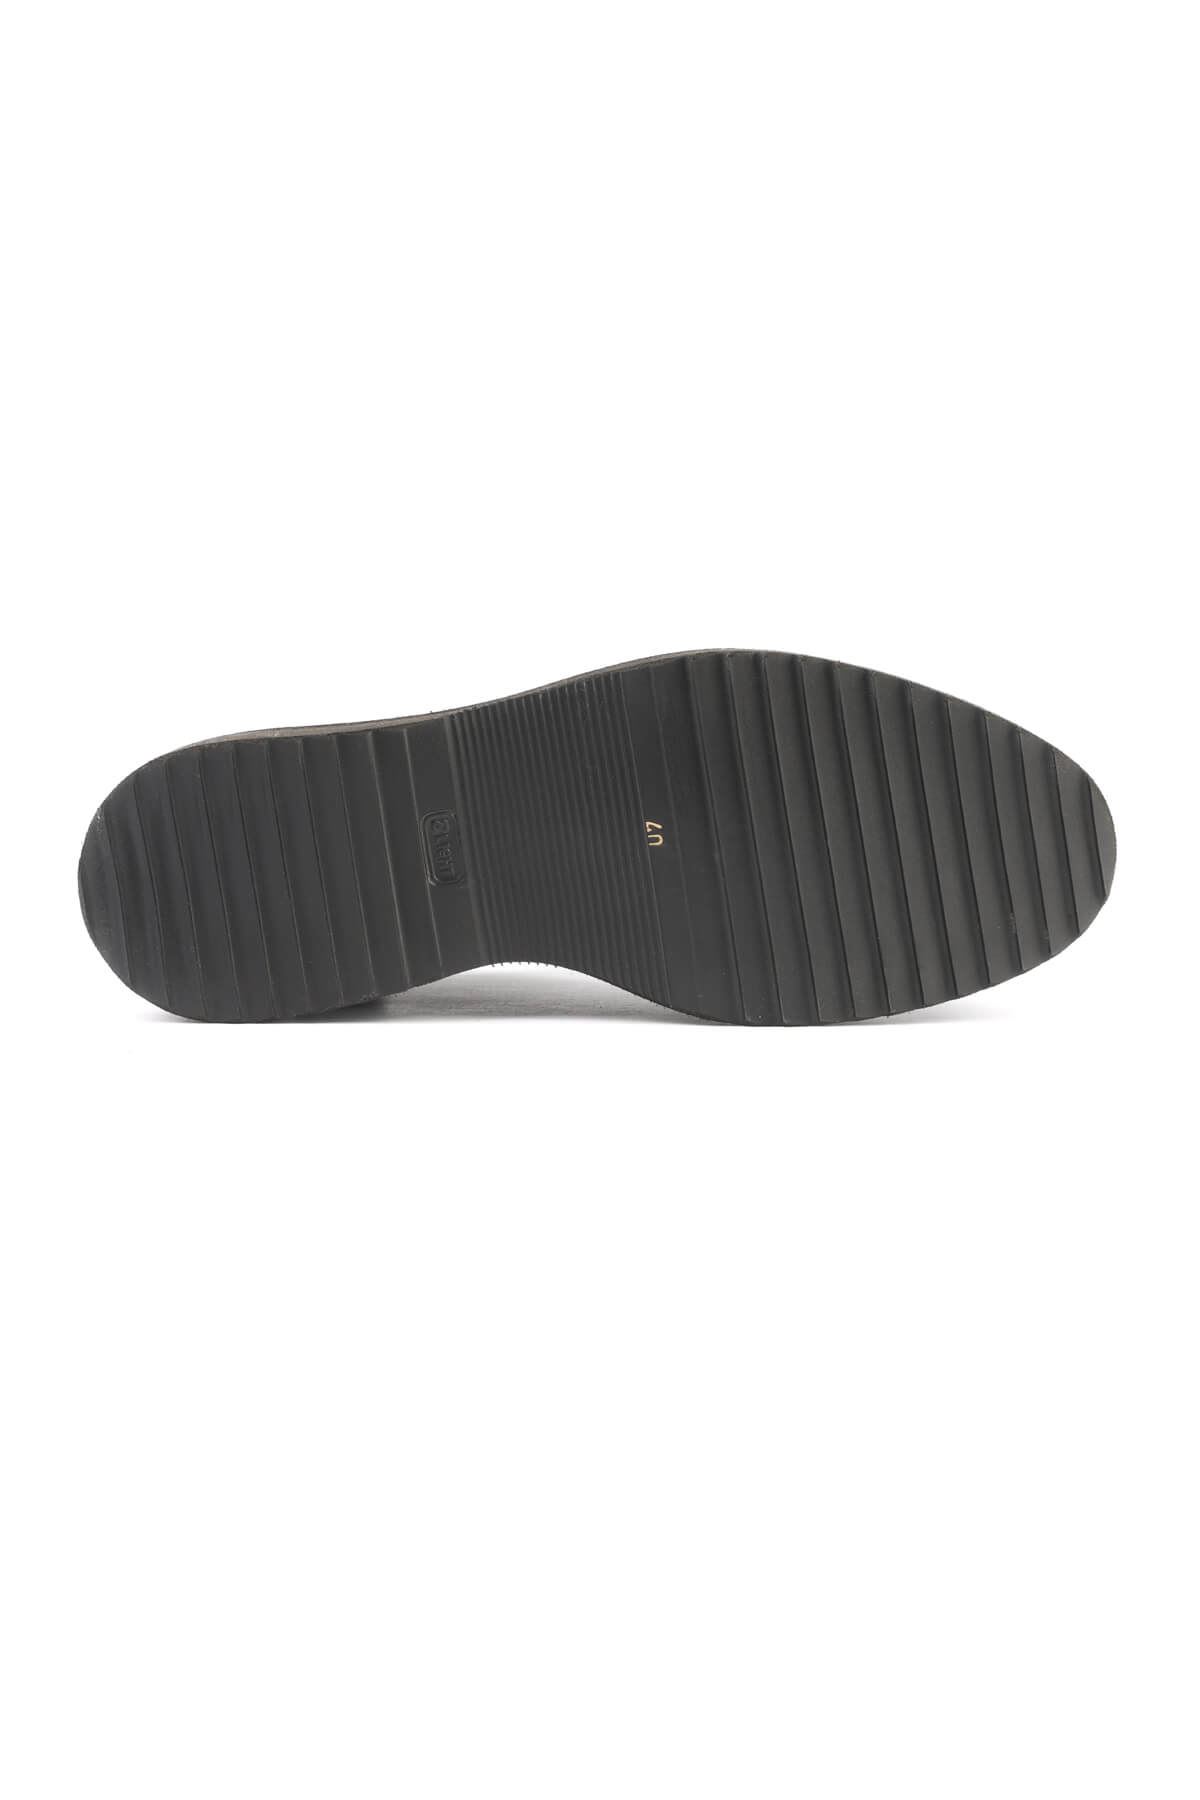 Libero 2903 Black Casual Shoes